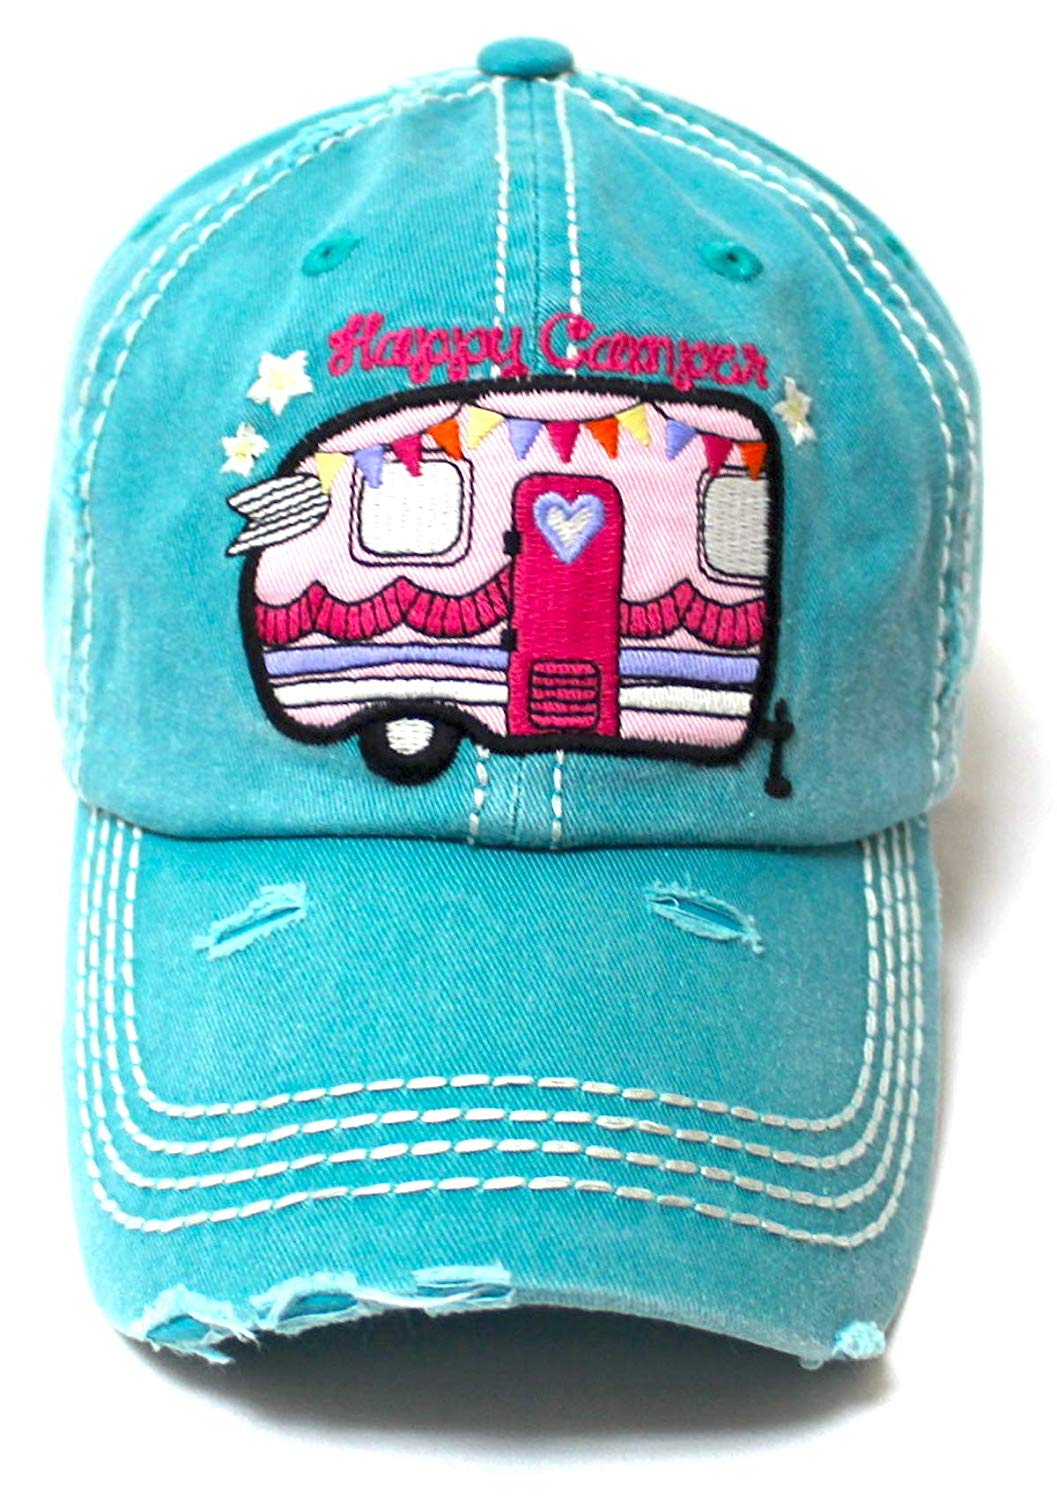 Women's Baseball Cap Vintage Happy Camper Monogram Embroidery Hat, Turquoise Blue - Caps 'N Vintage 